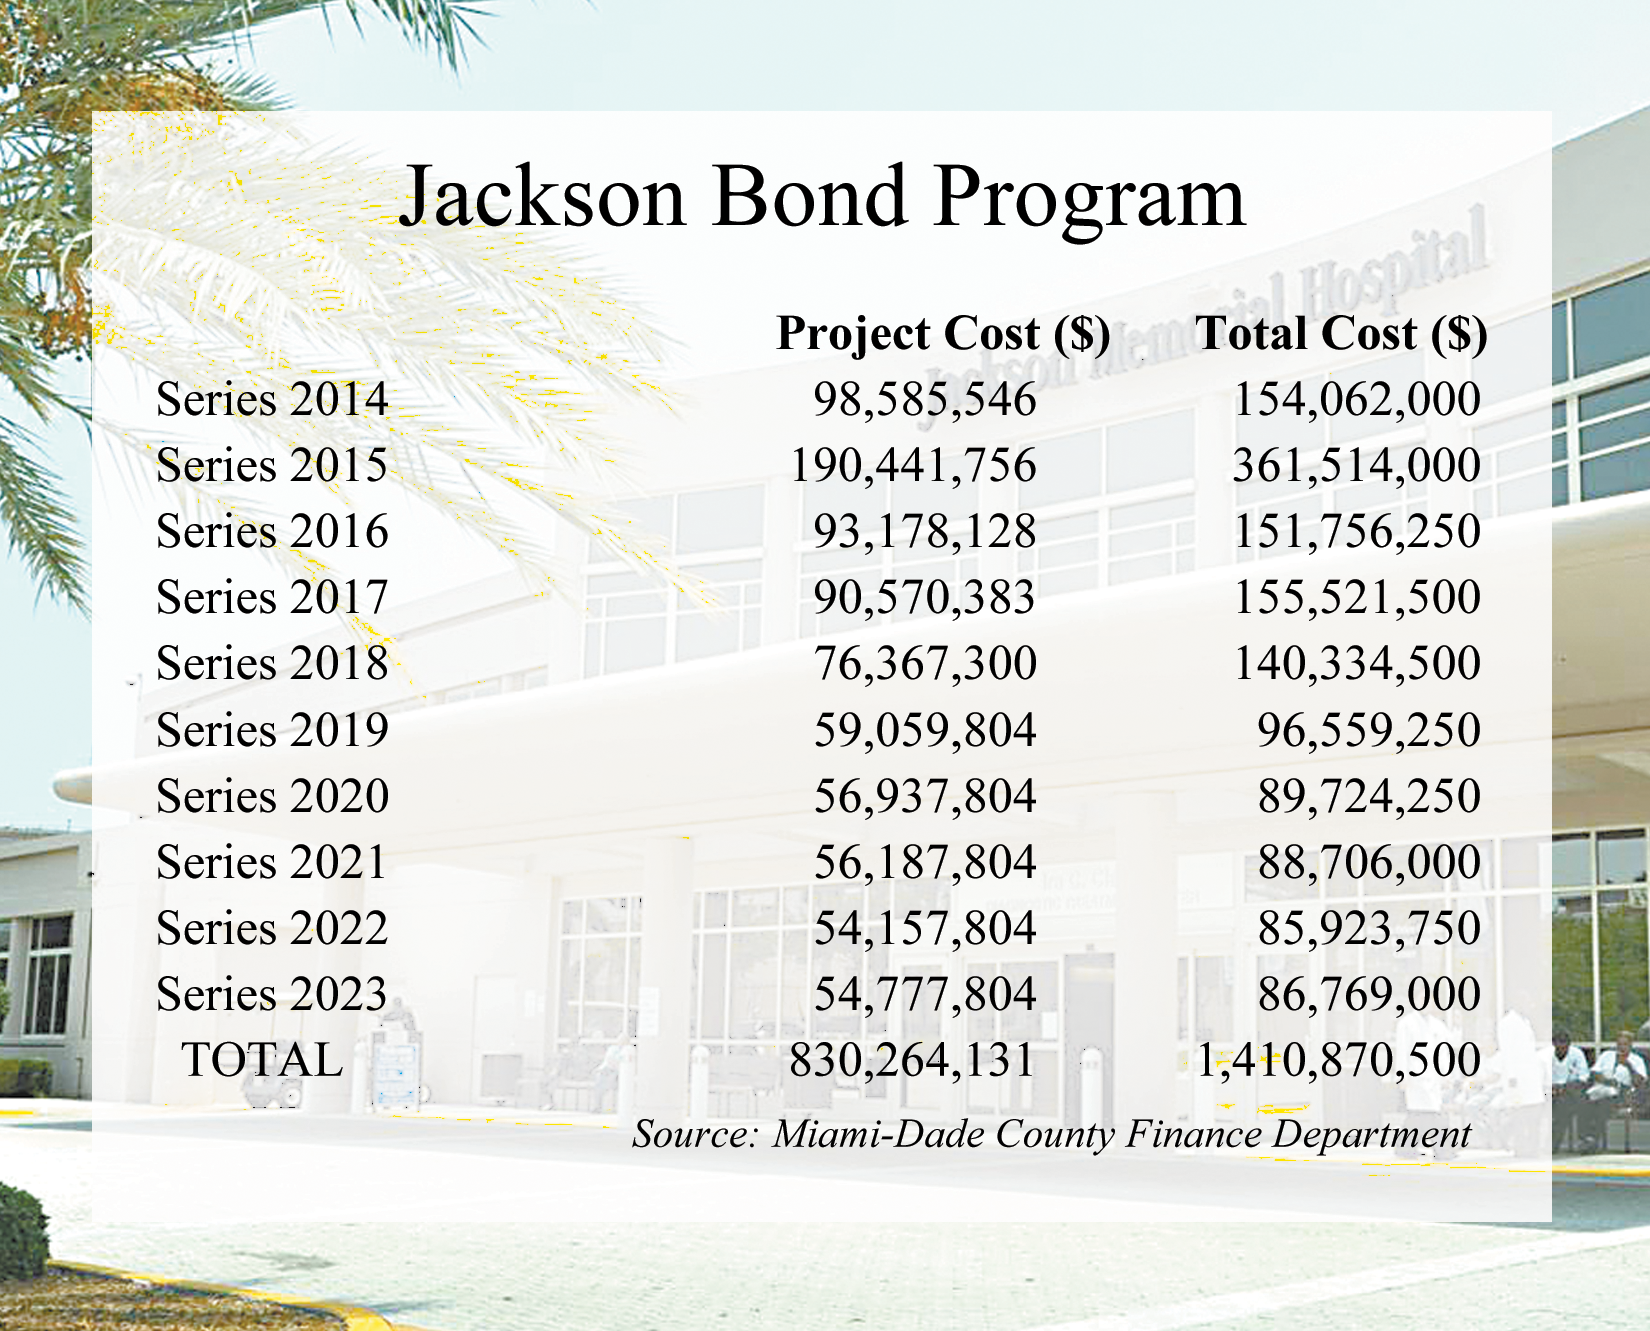 Jackson bonds: $1.4 billion cost to repay